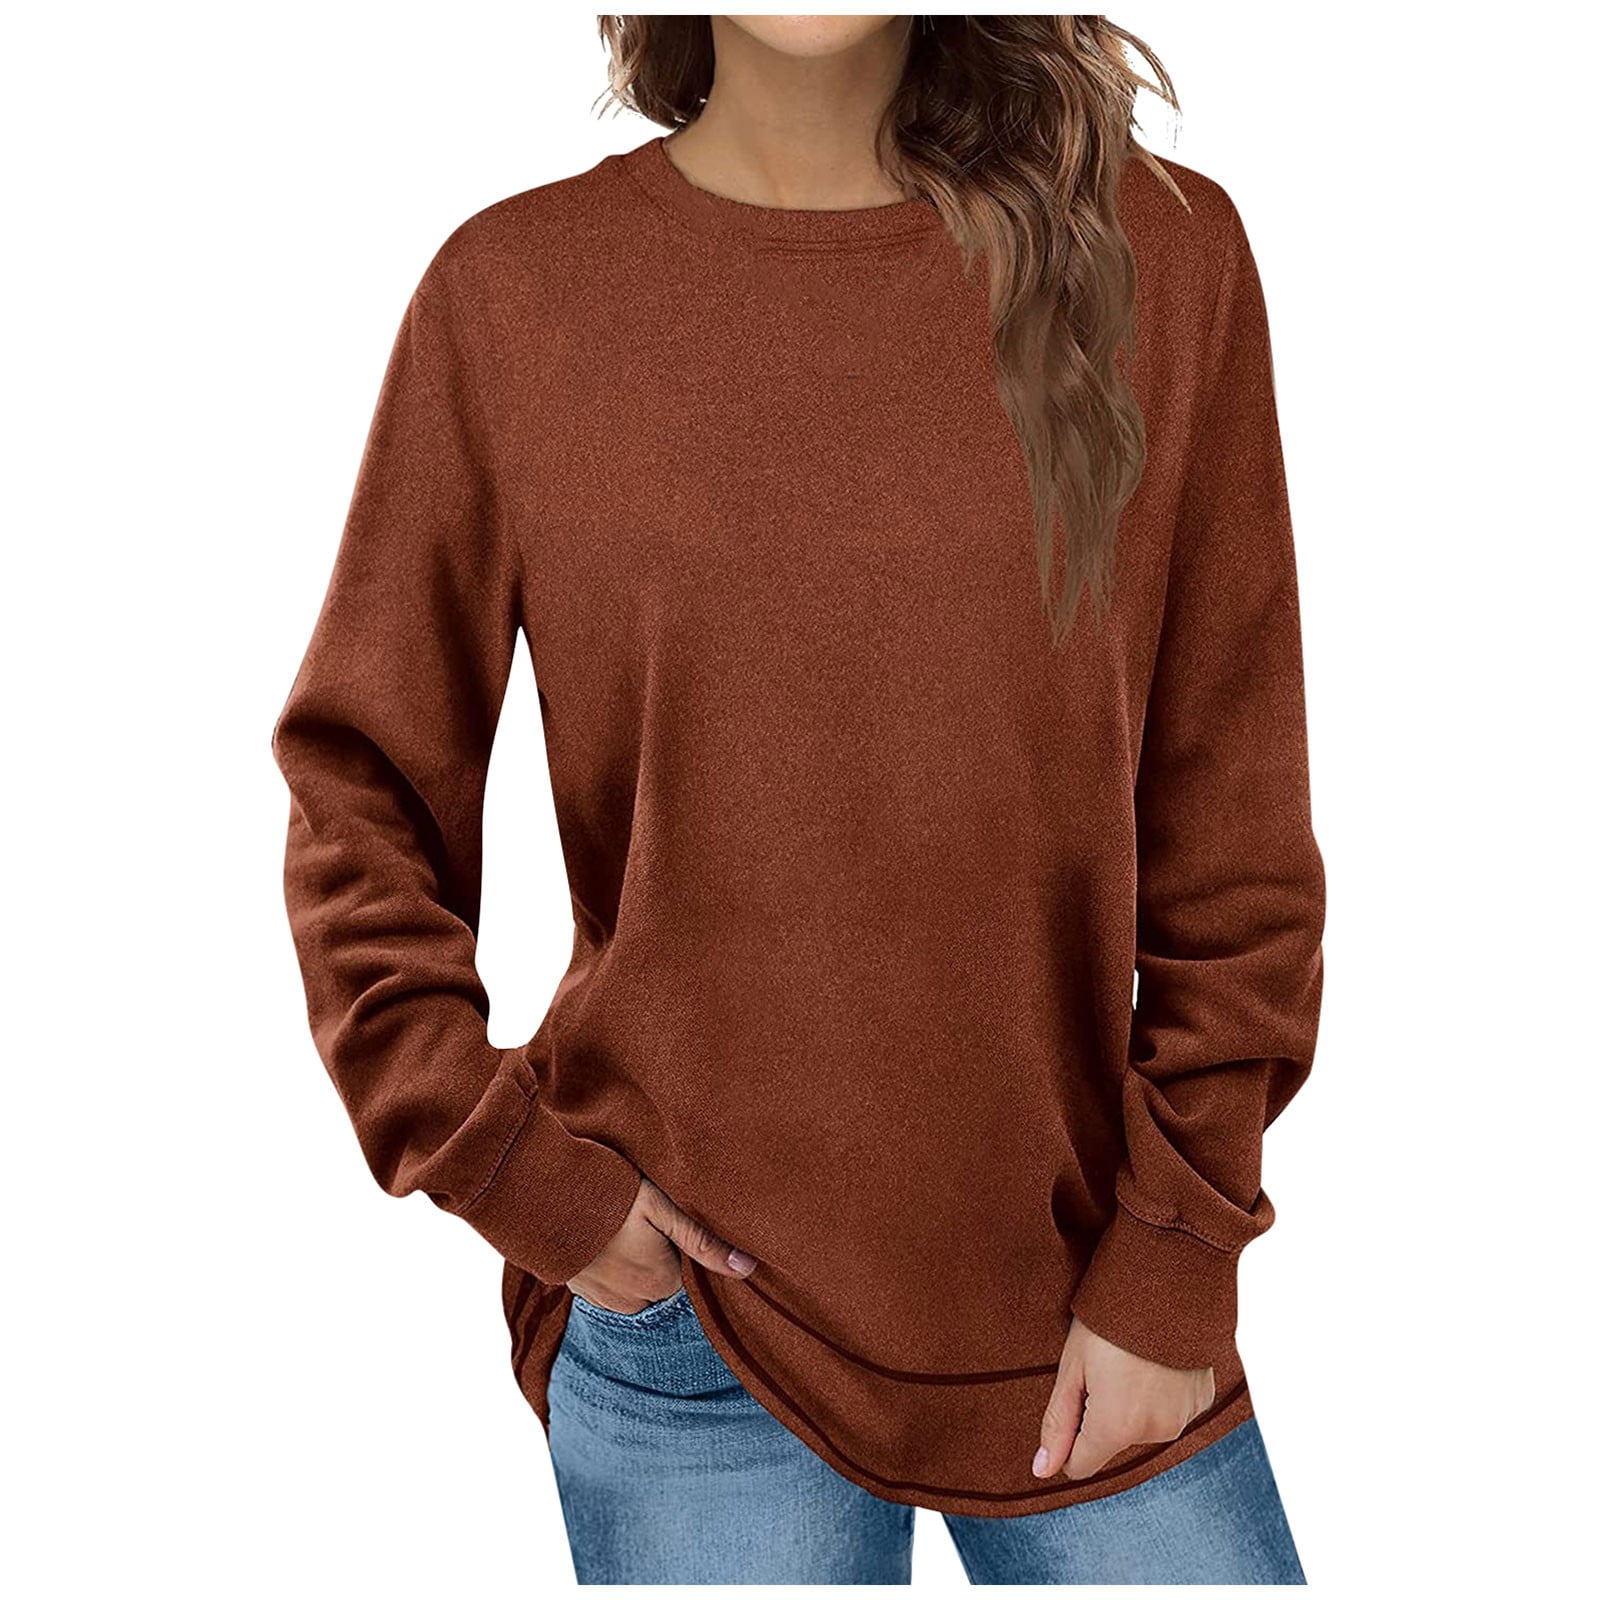 Sweatshirts for Women Casual Crewneck Long Sleeve Solid Color